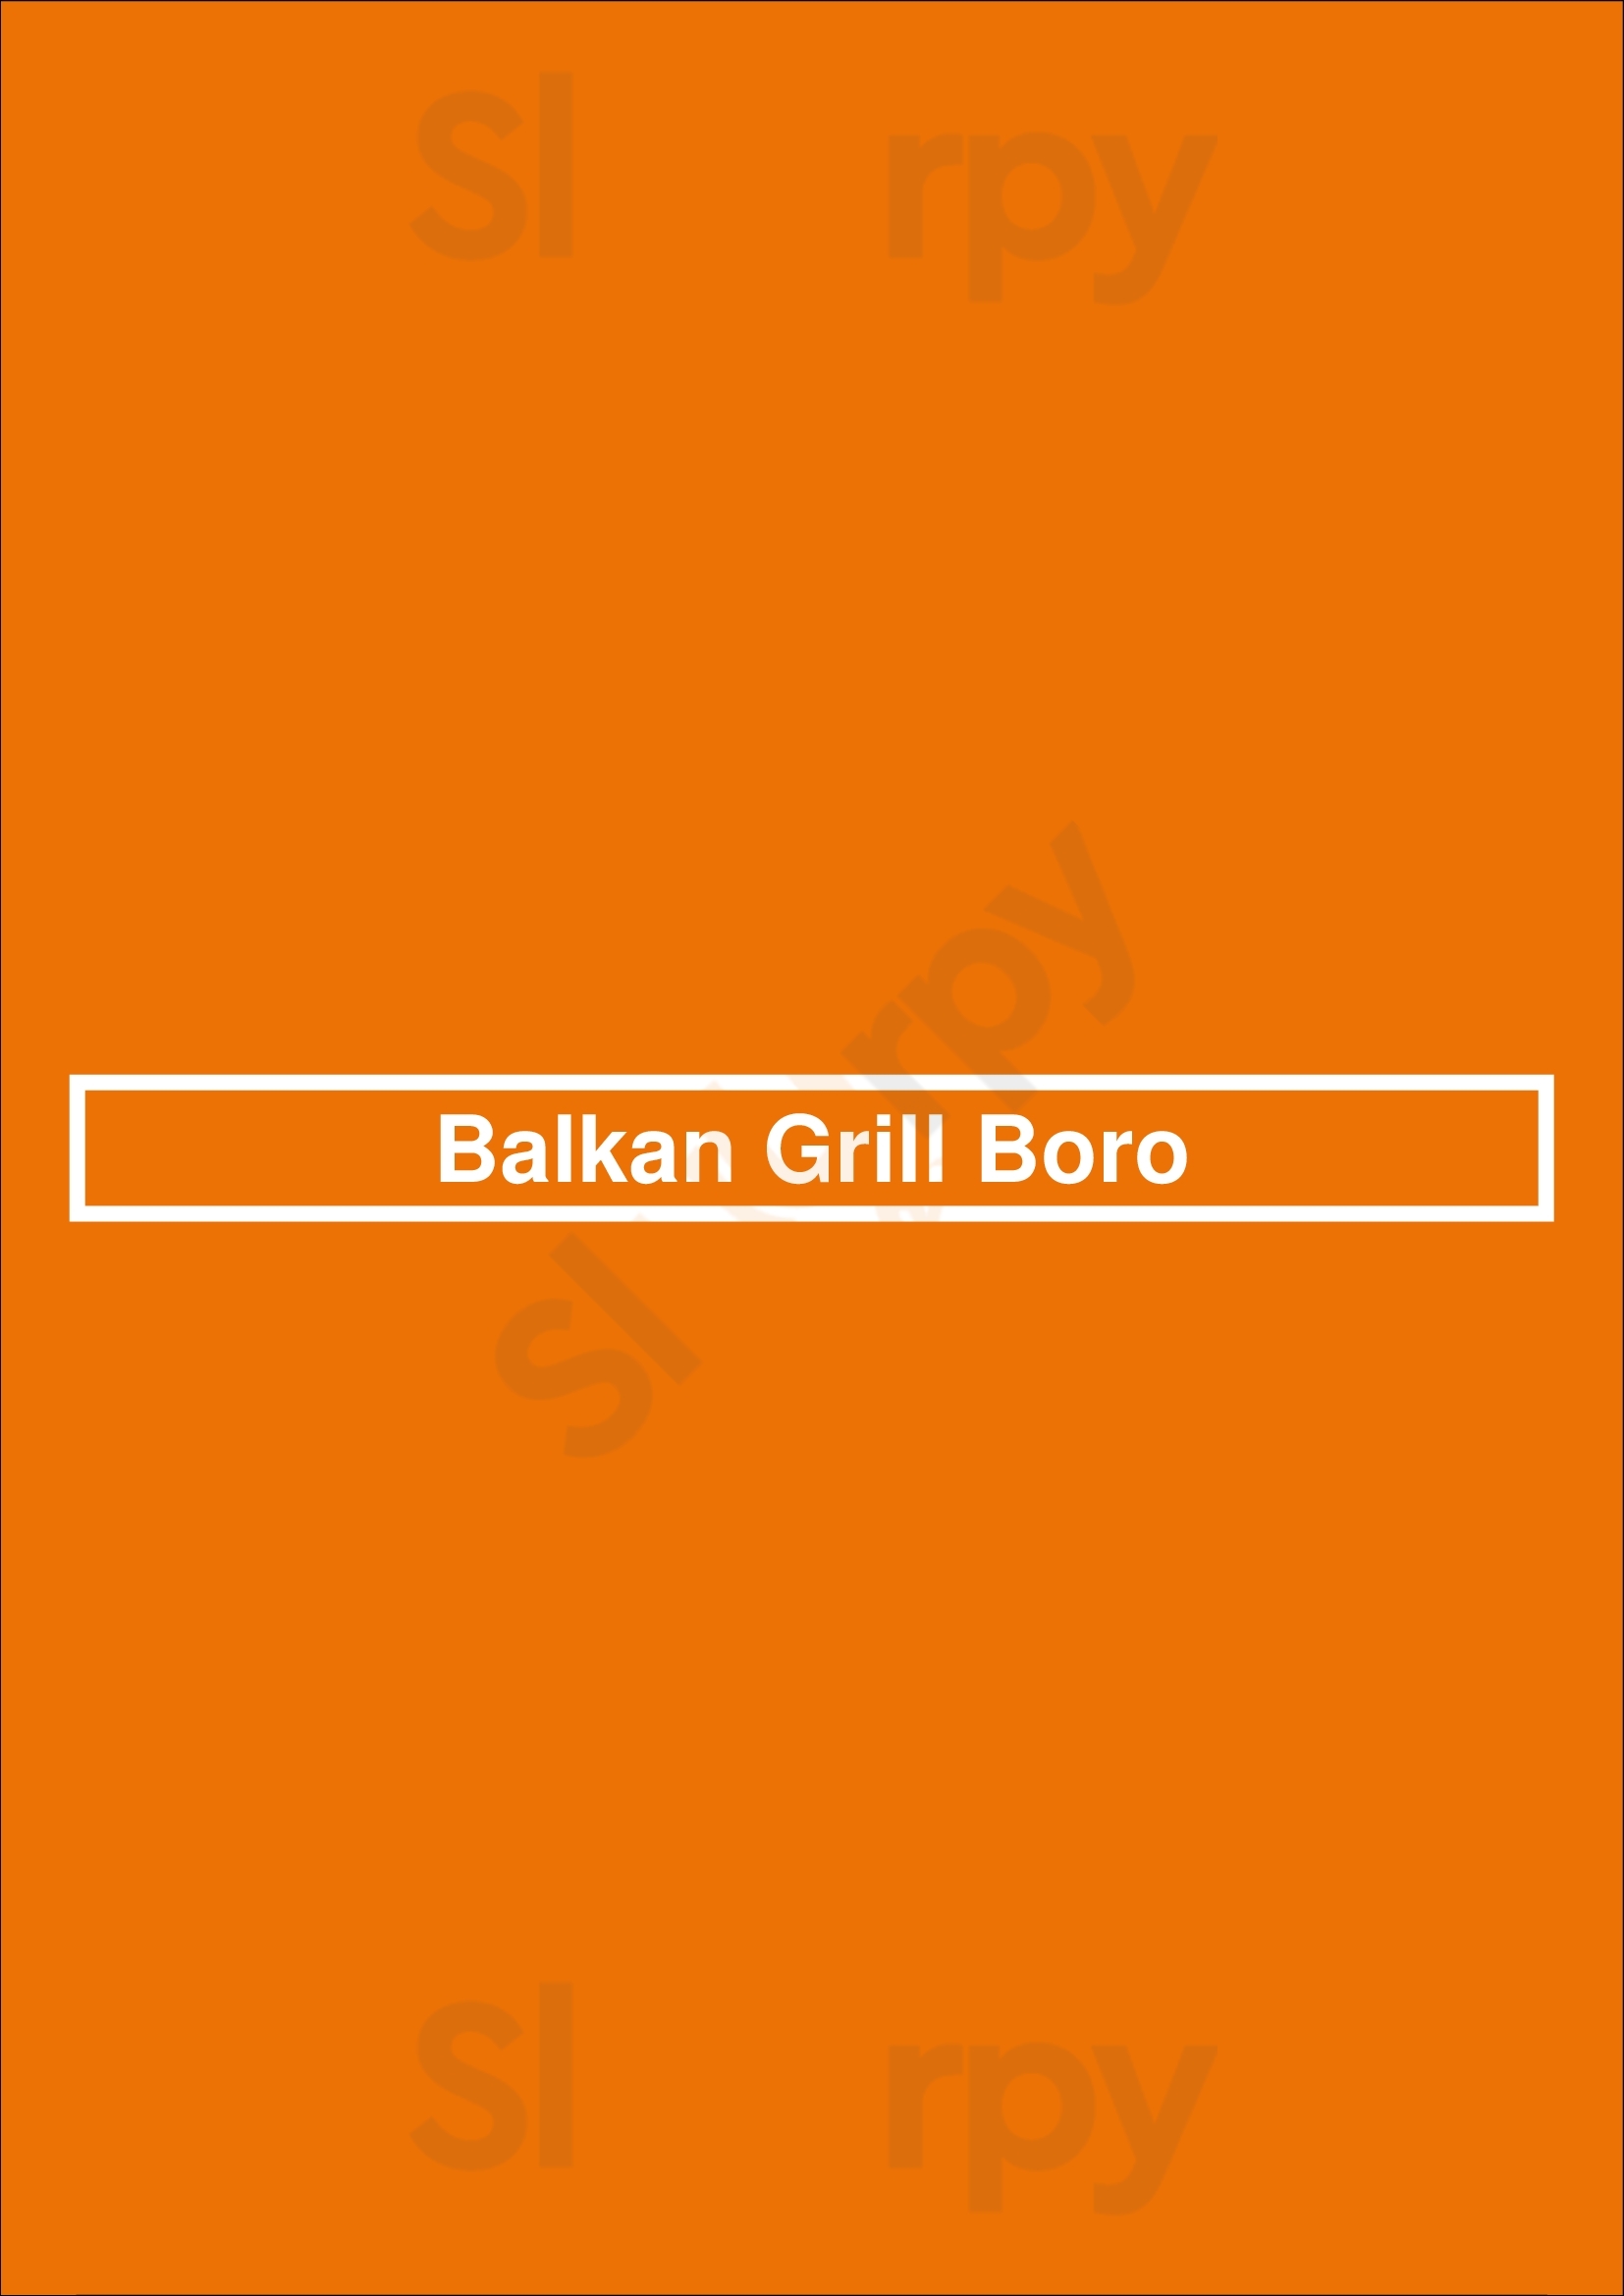 Balkan Grill Boro Utrecht Menu - 1